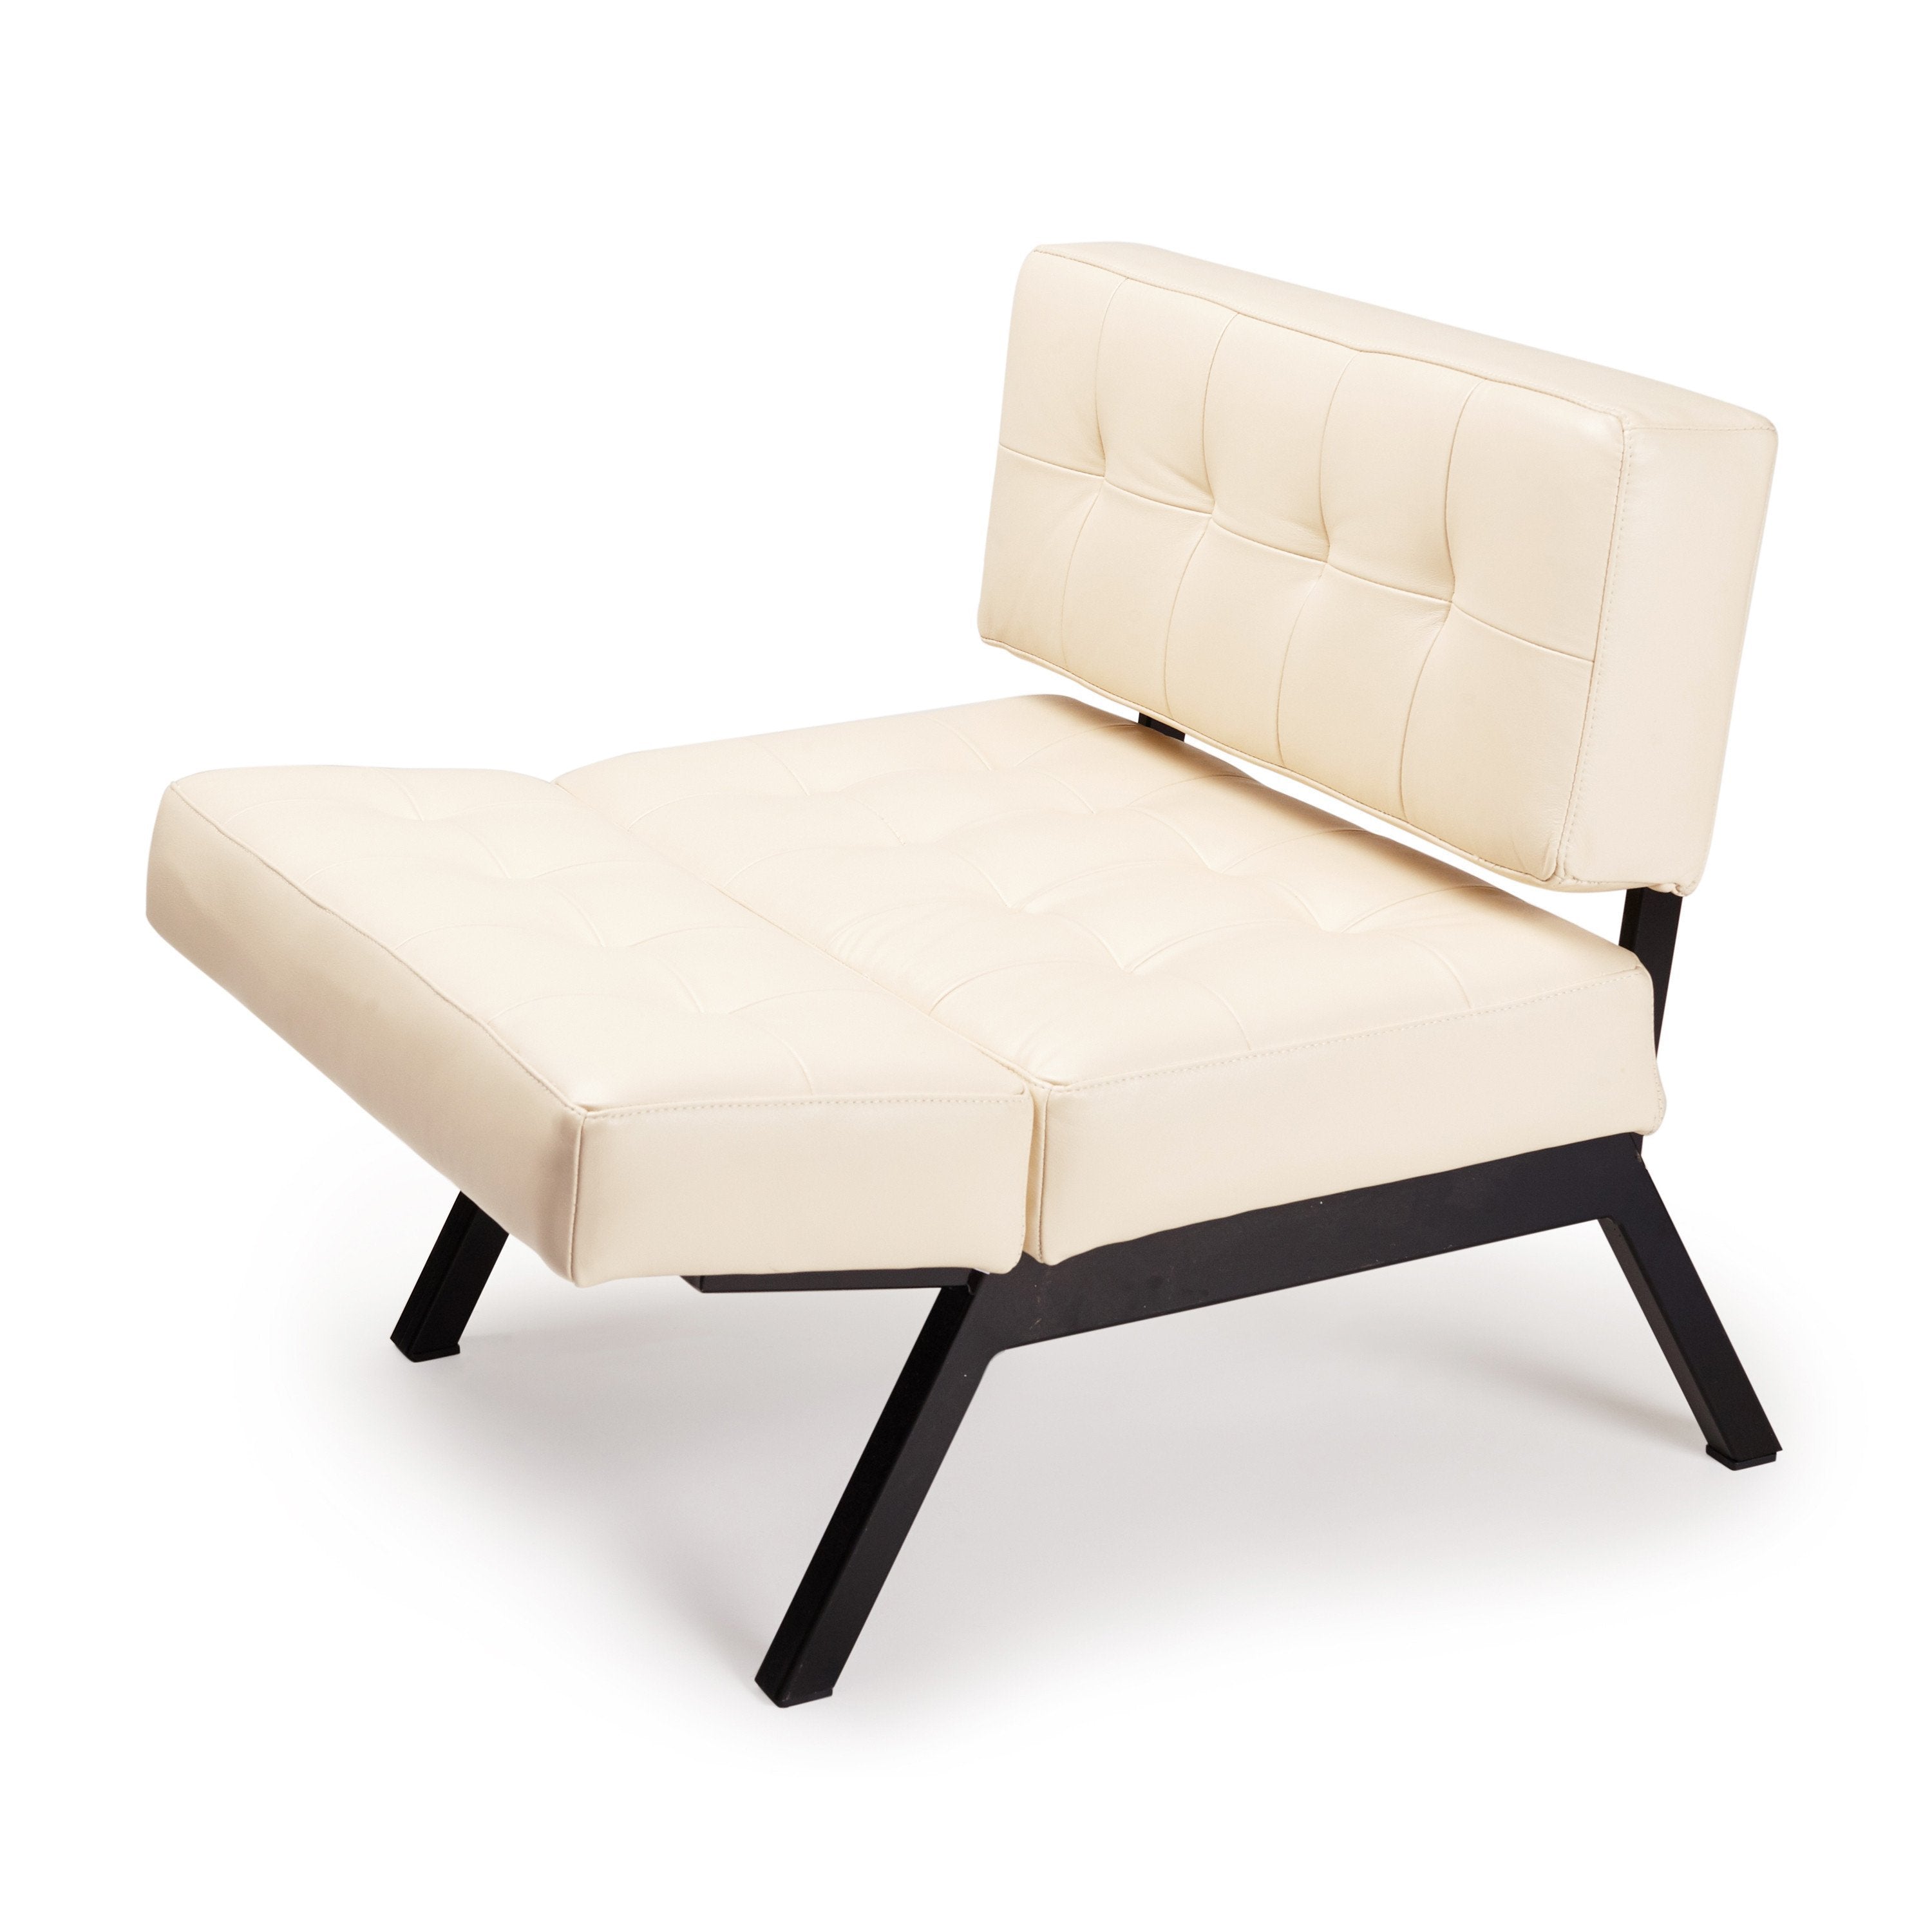 Convertible Chair, Ico Parisi, 1950-60s - ONEROOM